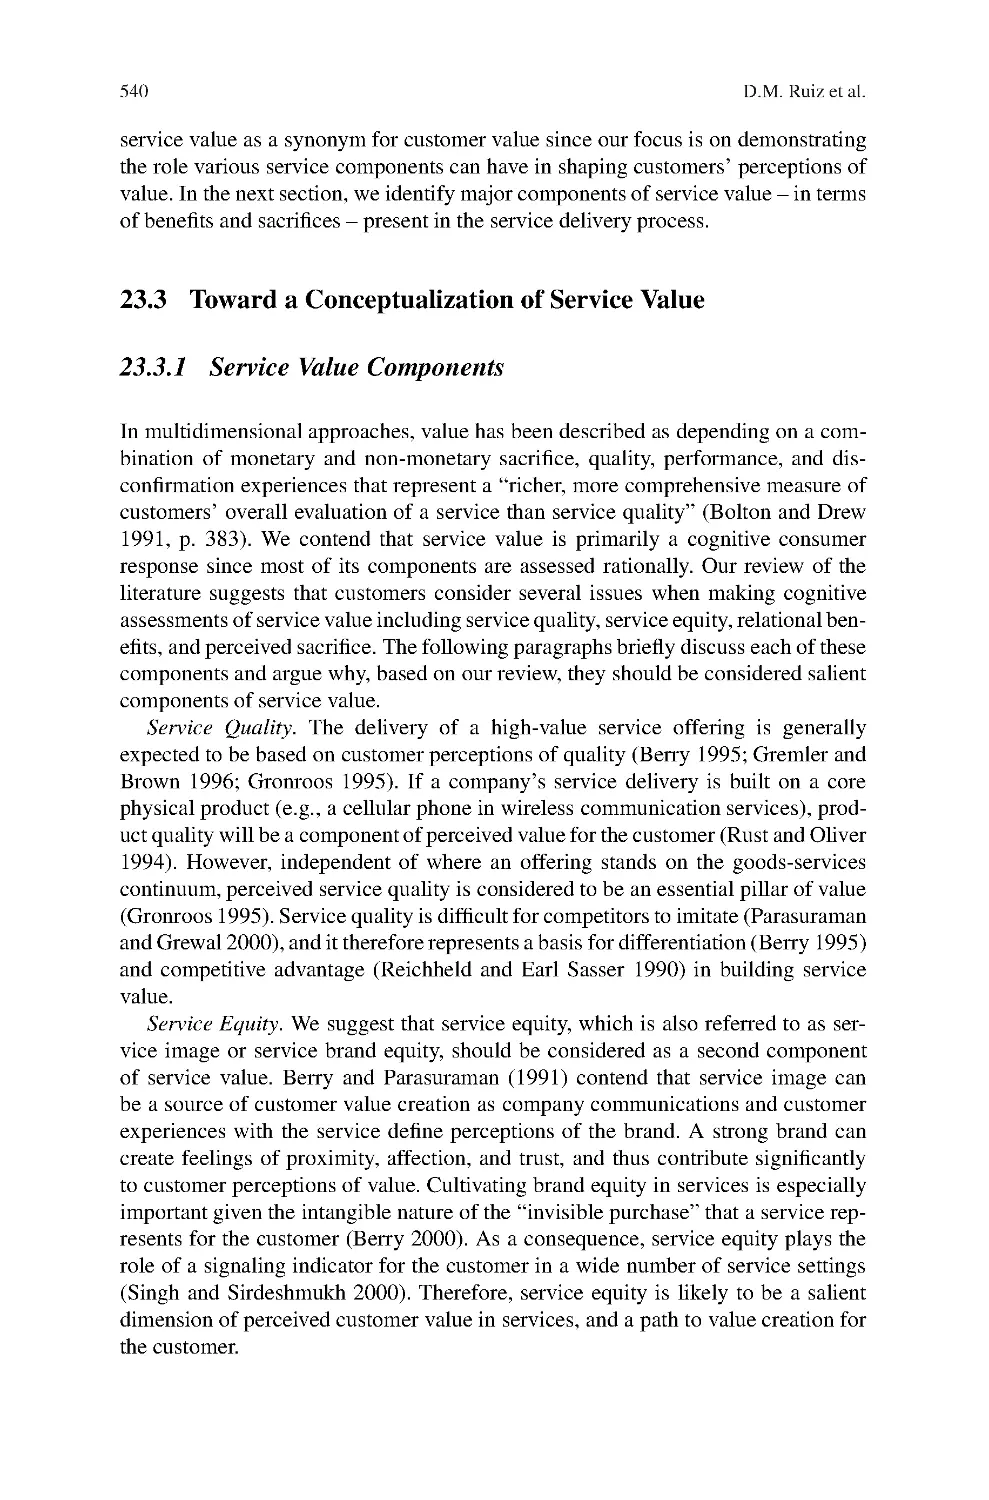 23.3 Toward a Conceptualization of Service Value